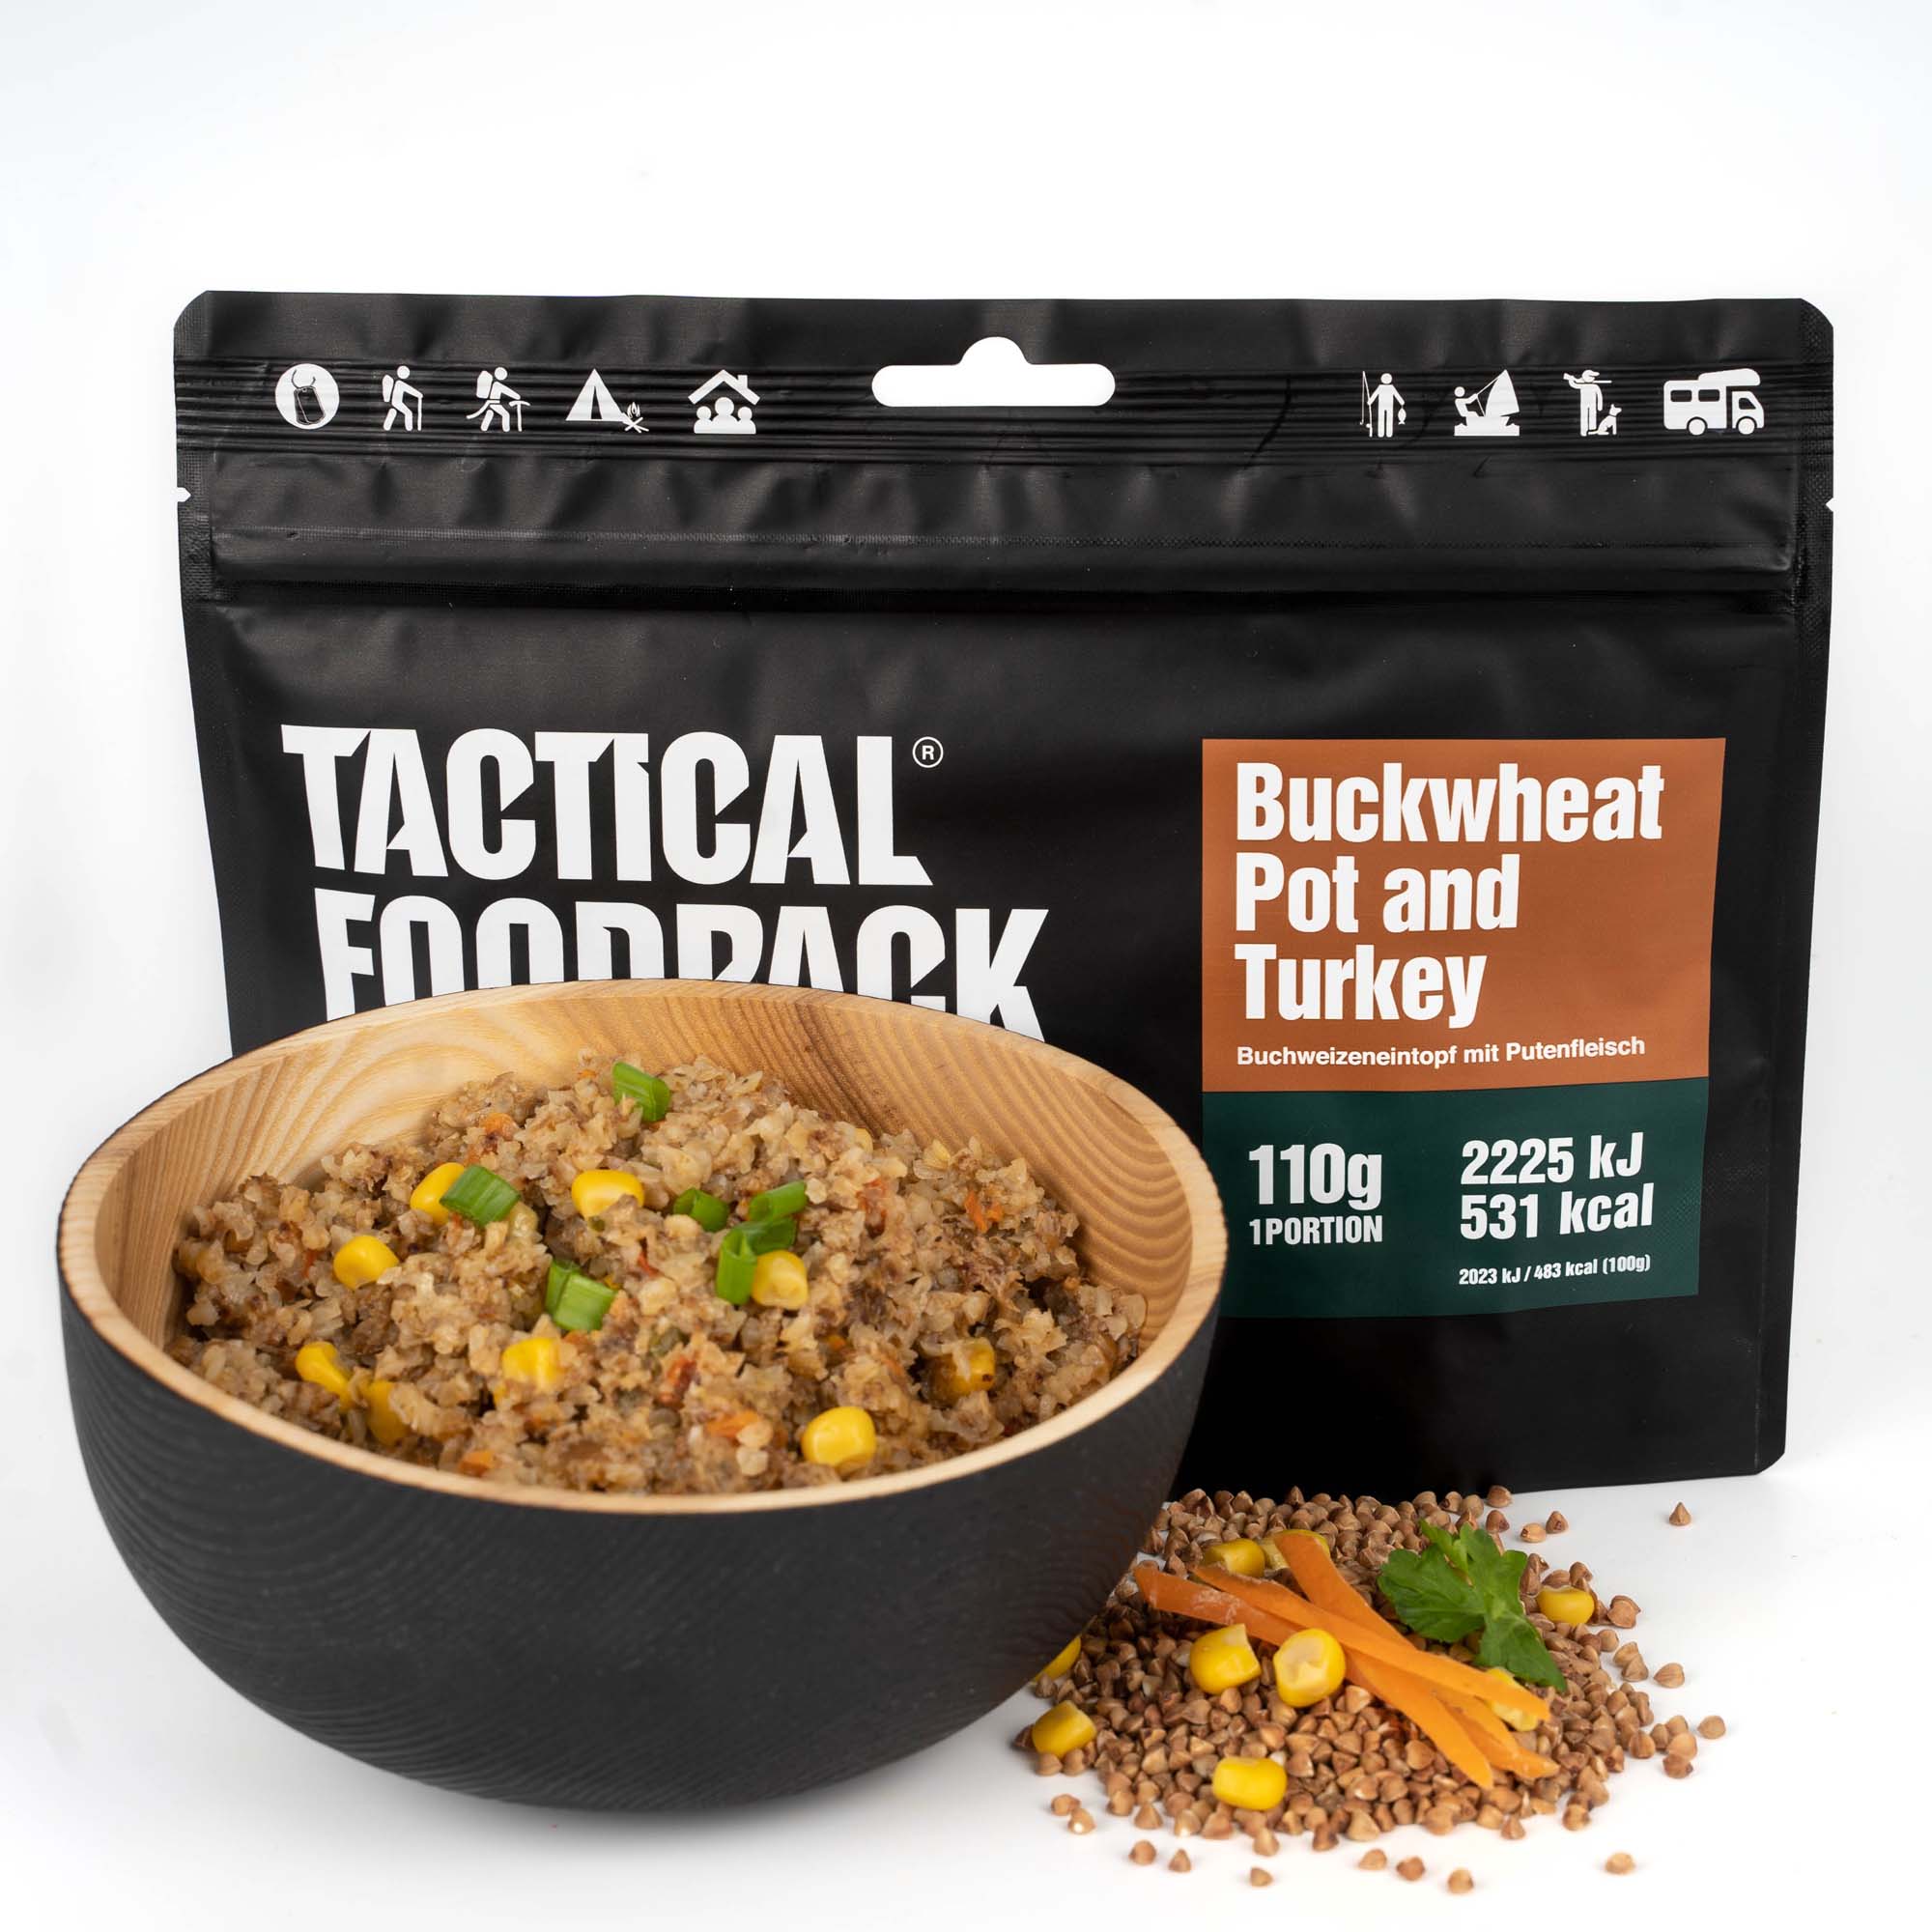 Tactical Foodpack | Buckwheat Pot and Turkey